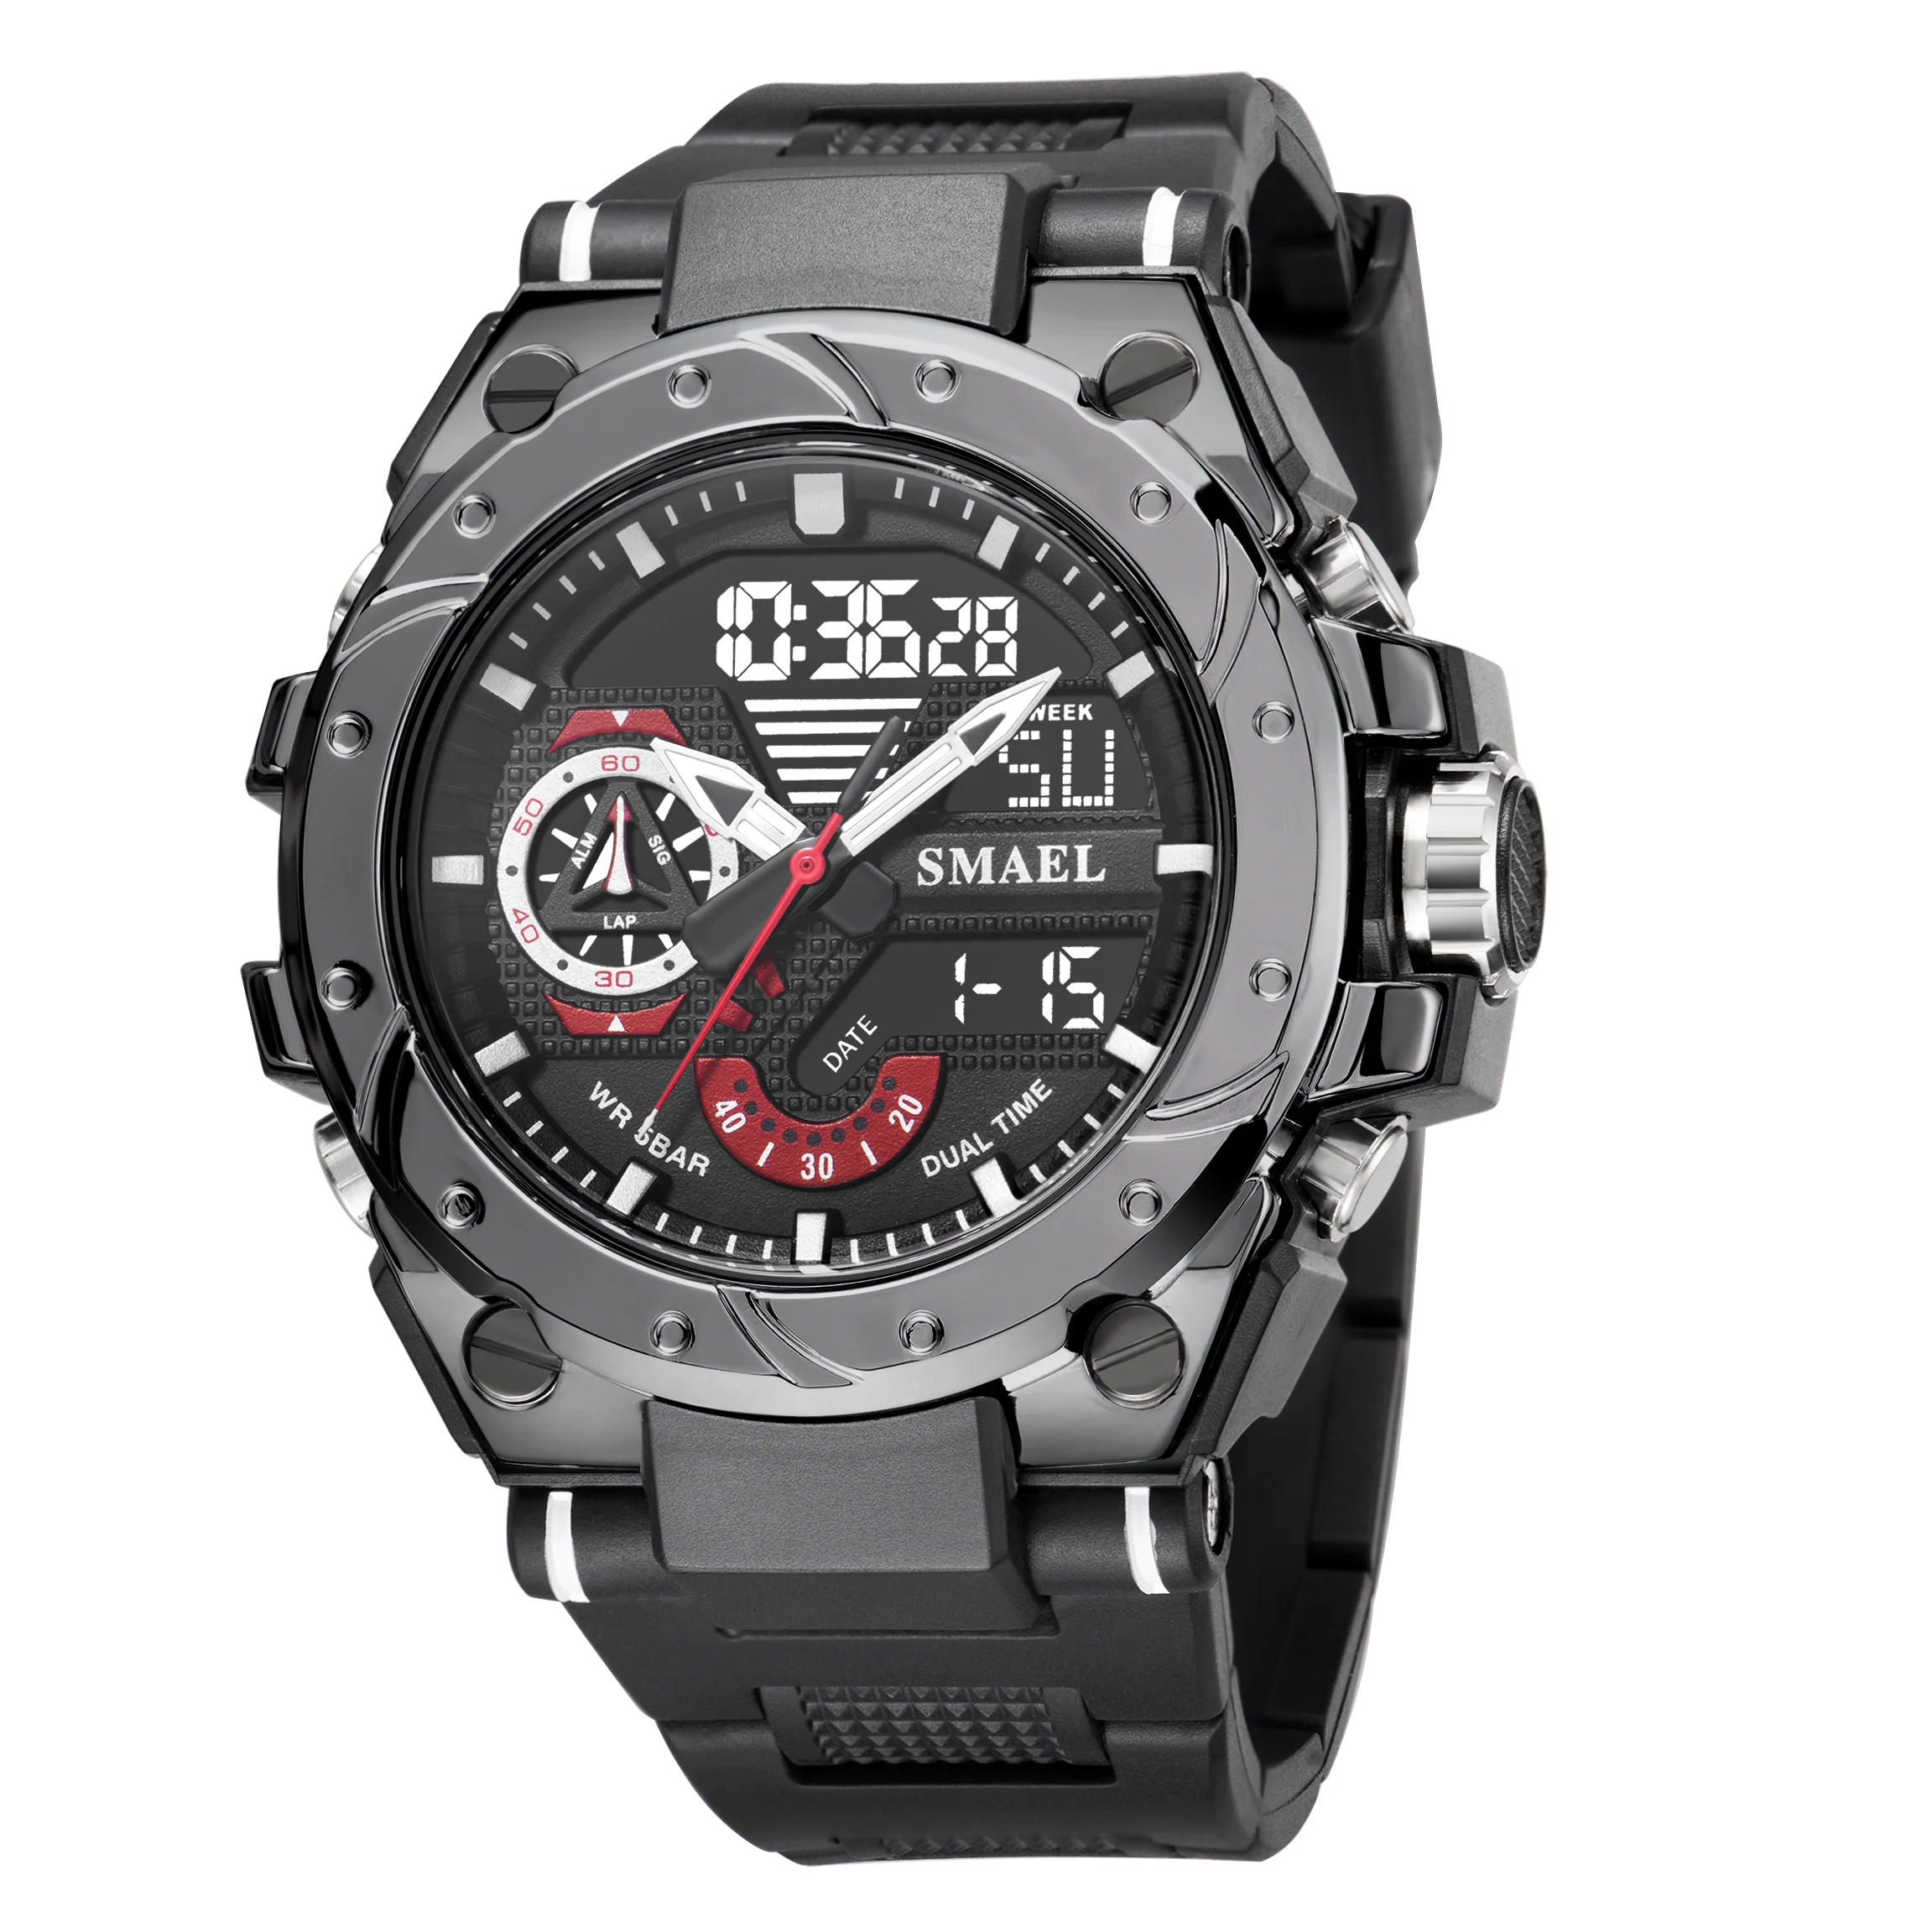 KIMLUD, Quartz Watch For Men SMAEL Wristwatches Watcholorful Red Bracelet 50M Waterproof Alarm Clock Analog Digitals 8060 Sport Watches, BLACK / China, KIMLUD Women's Clothes